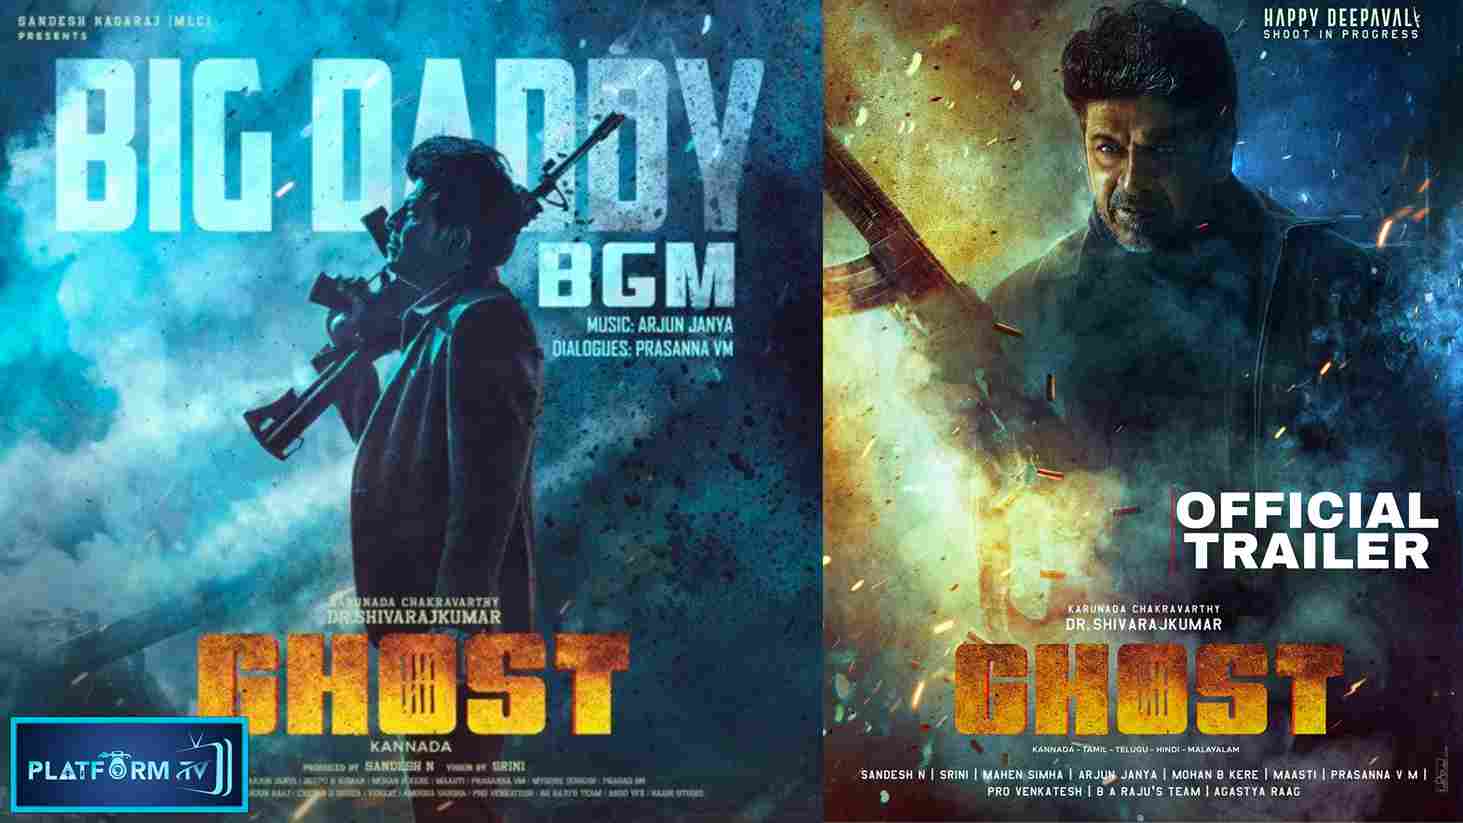 Ghost Movie Trailer - Platform Tamil